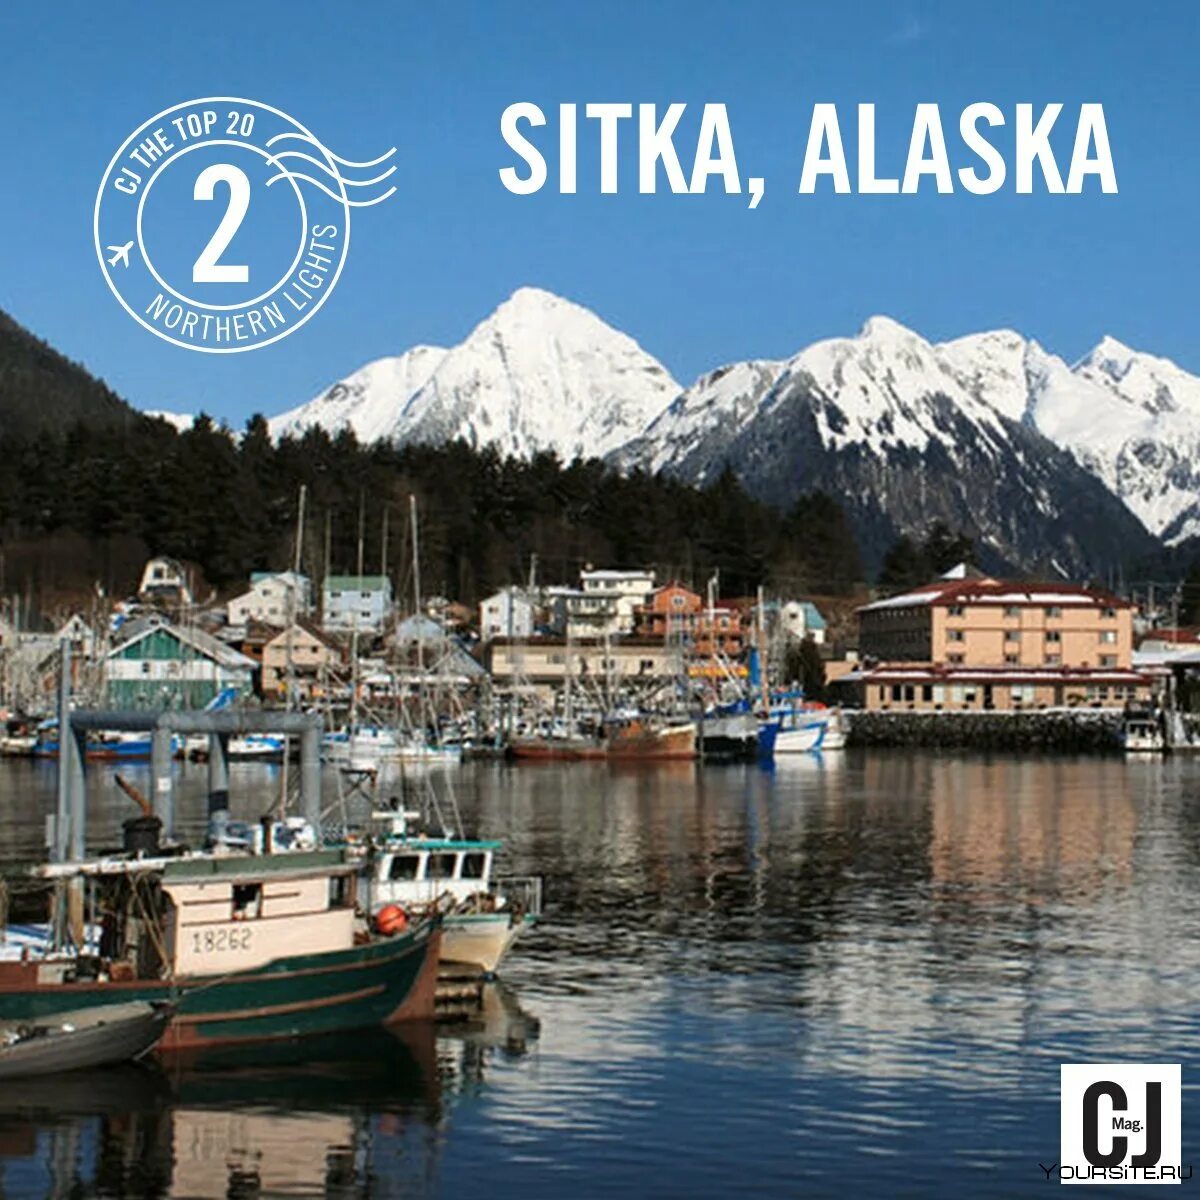 Код аляски. Остров Ситка Аляска. Ситка Аляска достопримечательности. США Аляска город Ситка. Sitka Аляска.